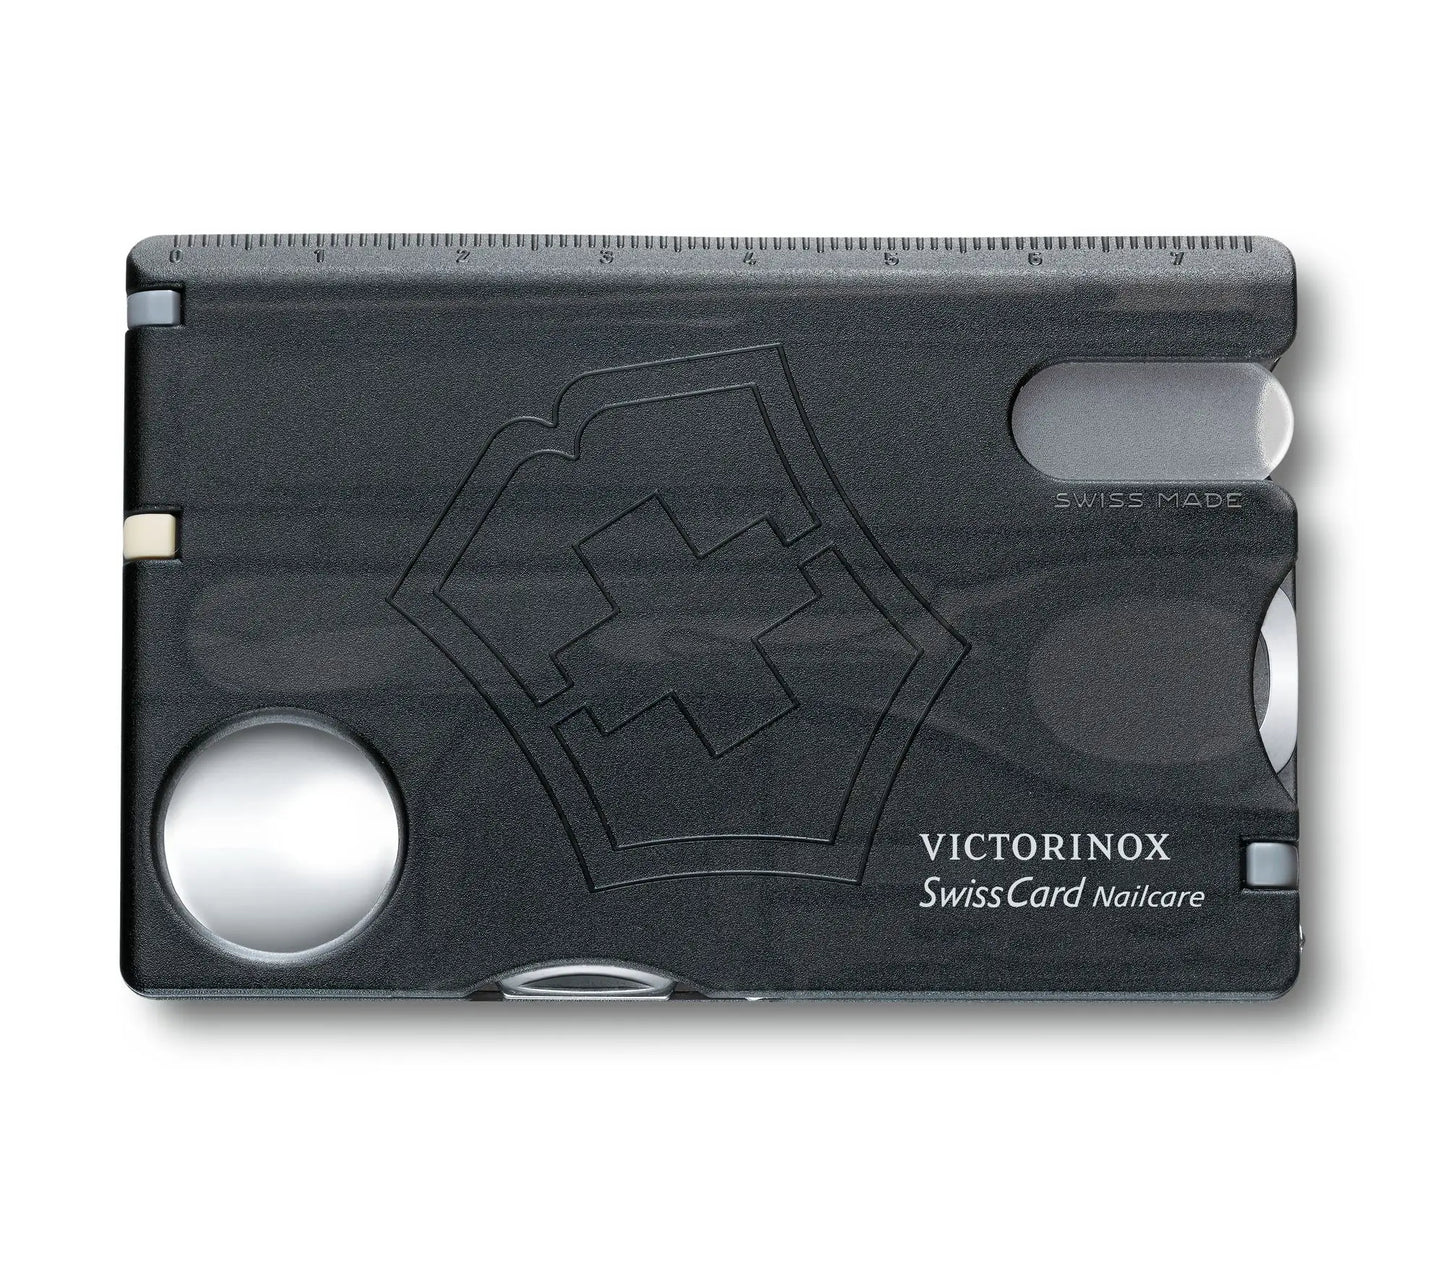 Victorinox Swisscard Nailcare 13 Function - Black